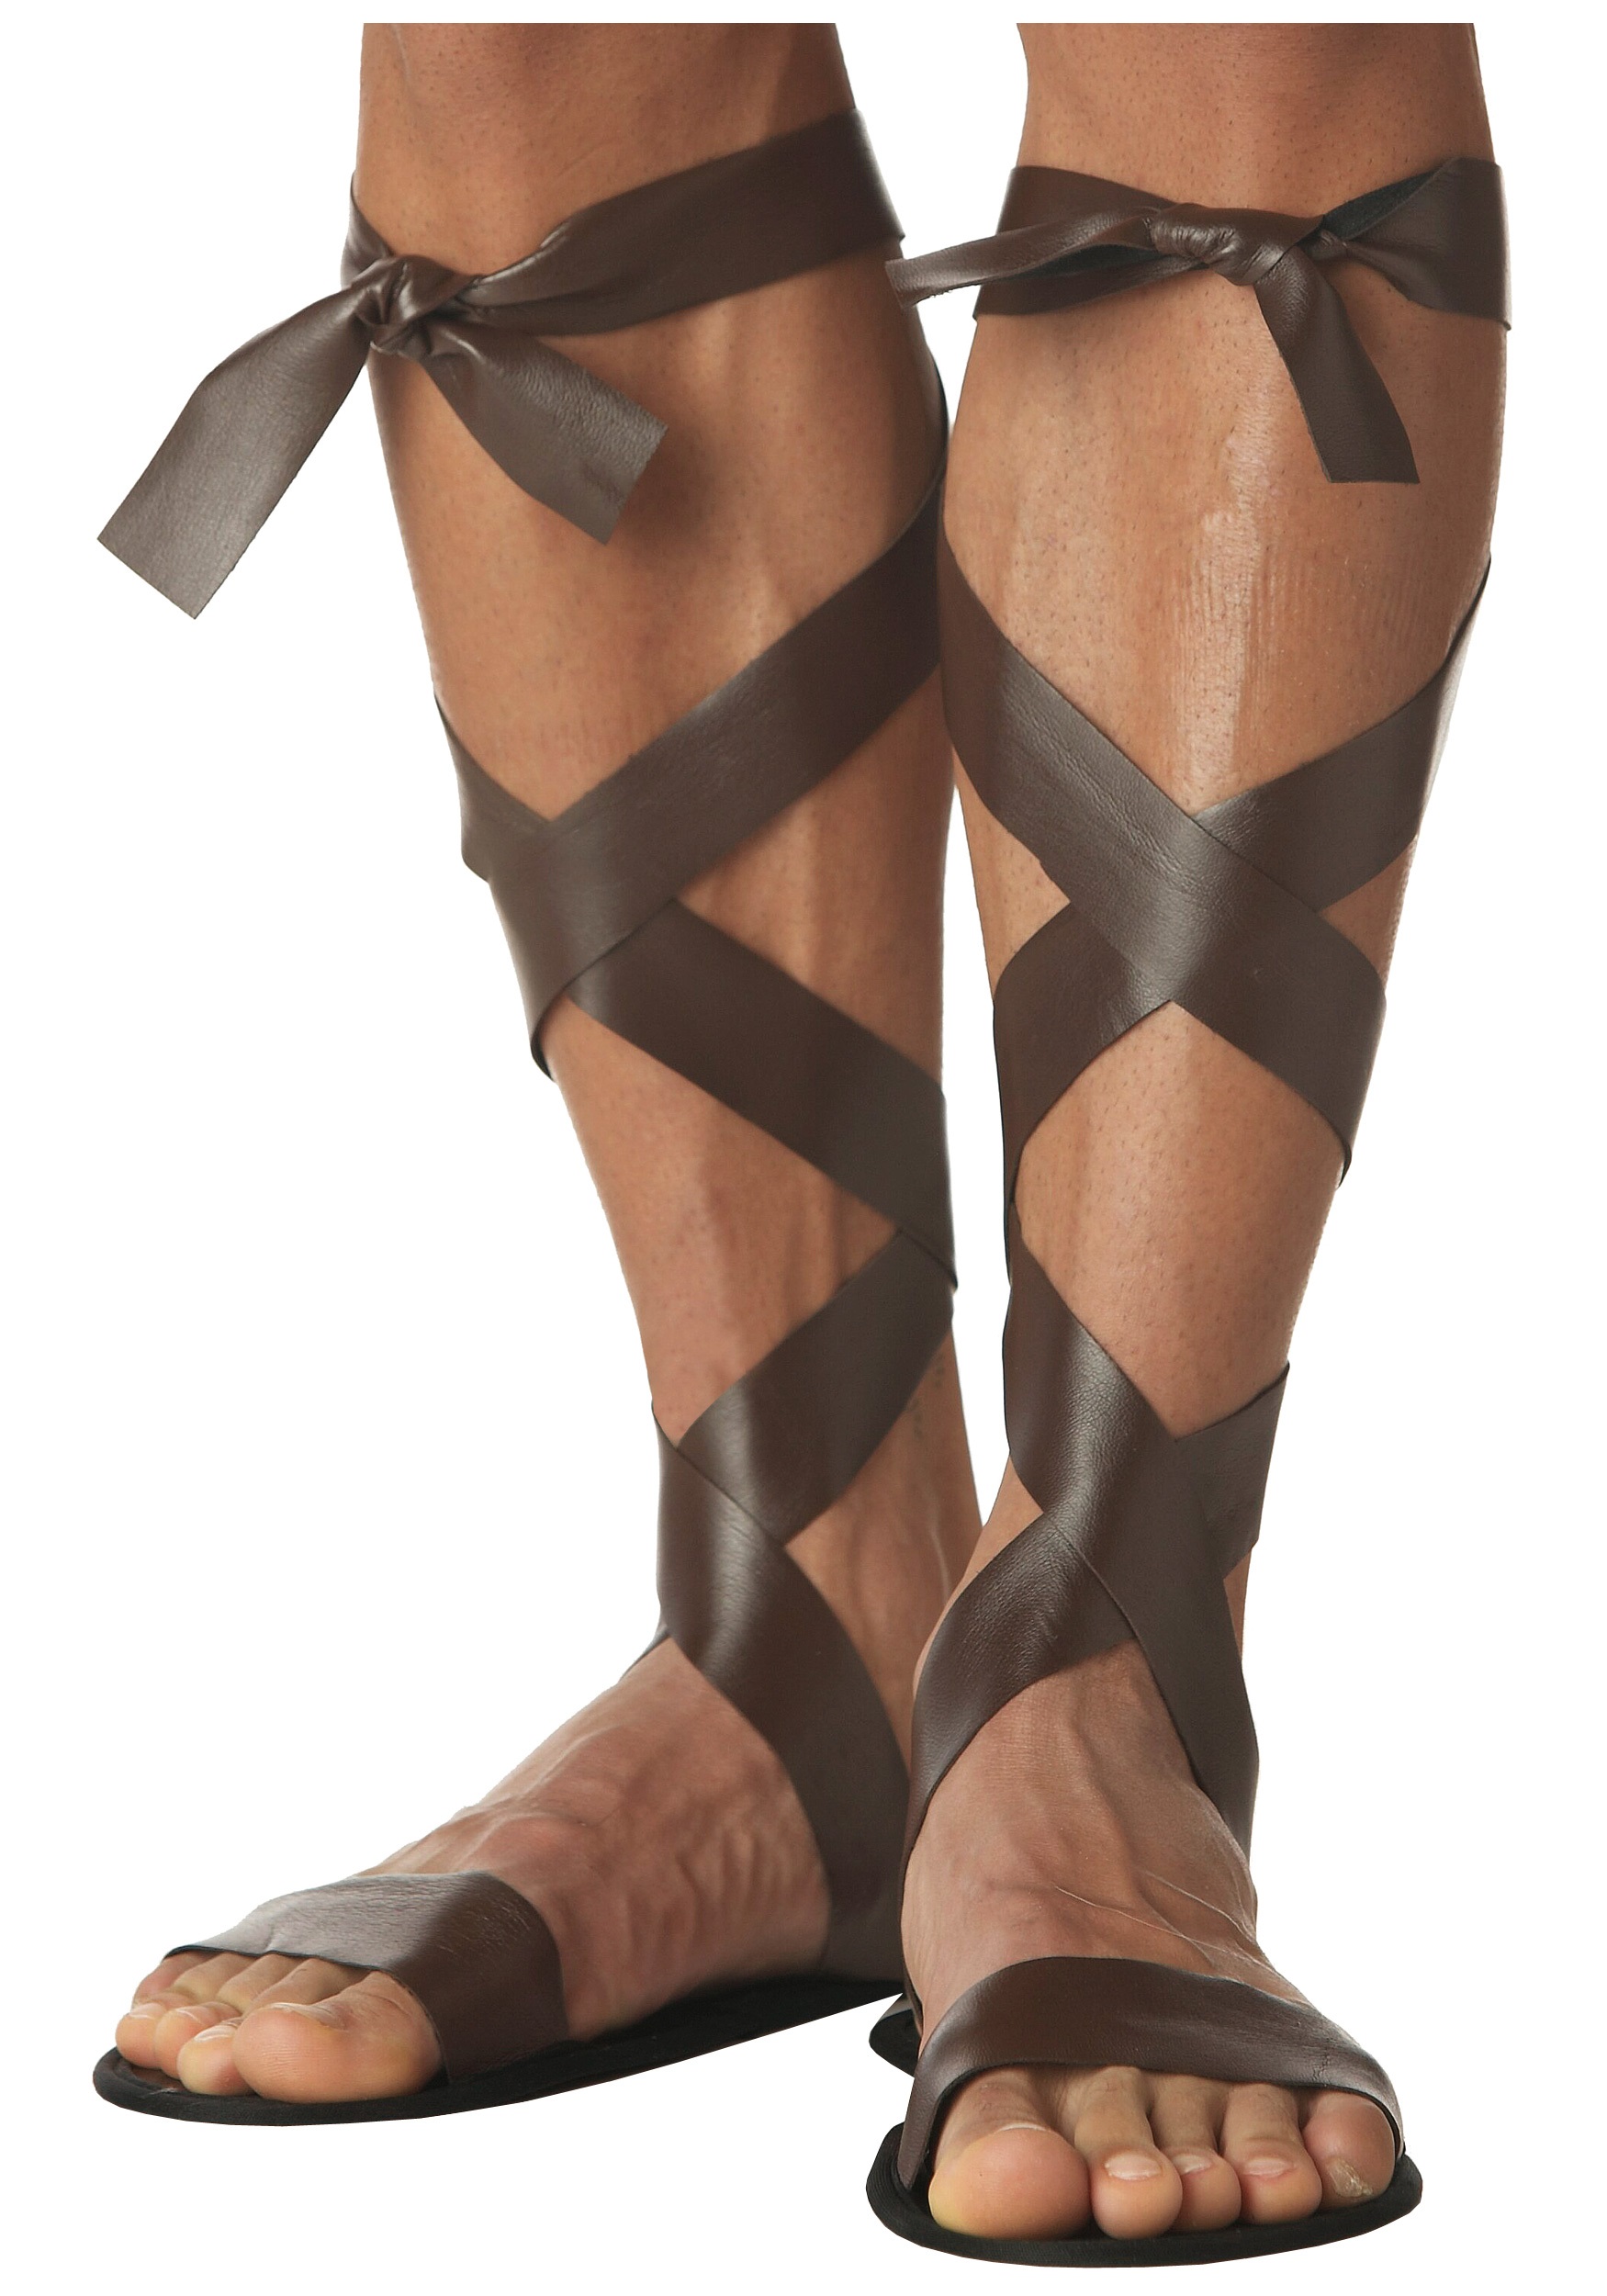 egyptian sandals mens